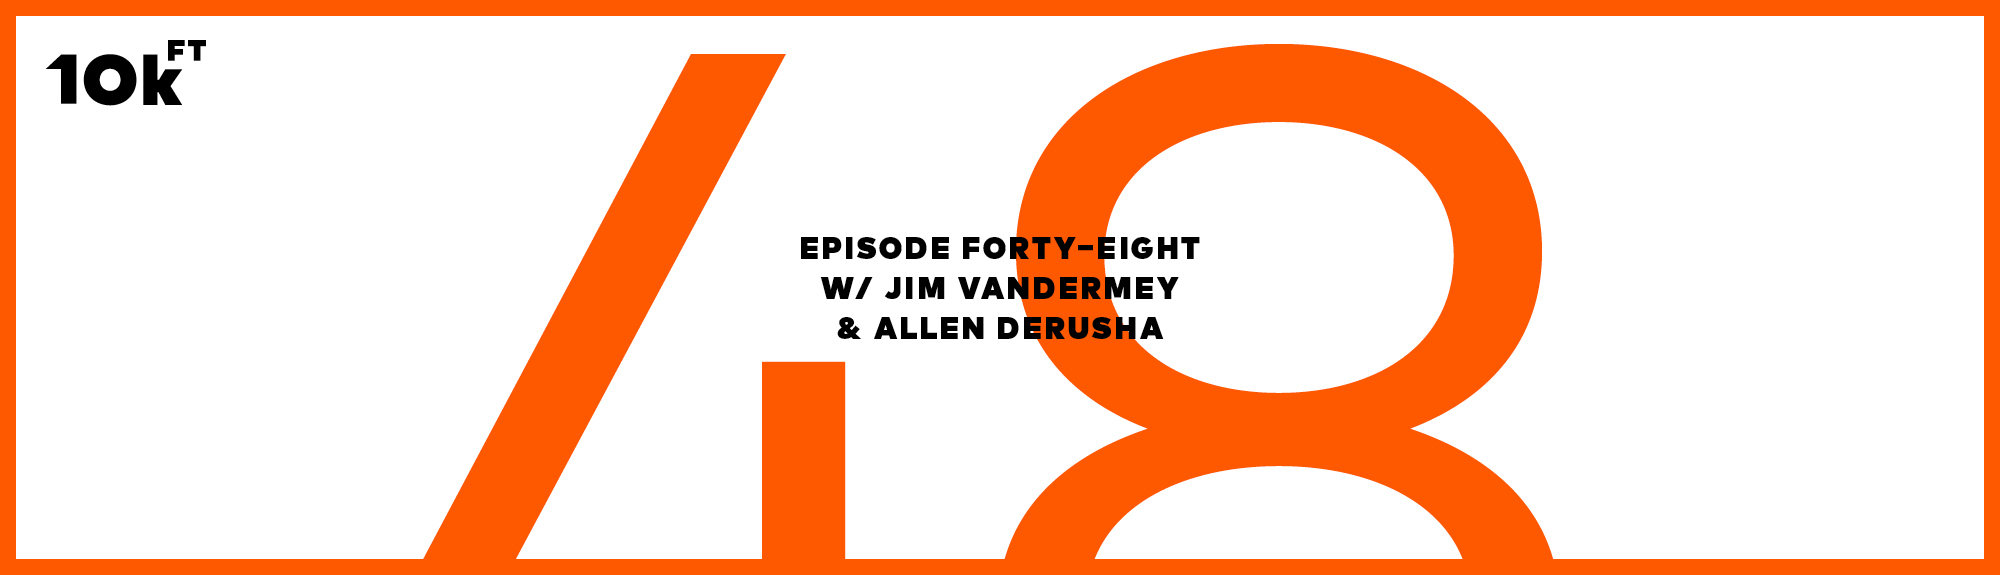 Ten Thousand Feet Podcast Episode 48: Automation Infrastructure with Jim VanderMey and Allen Derusha - Part 1